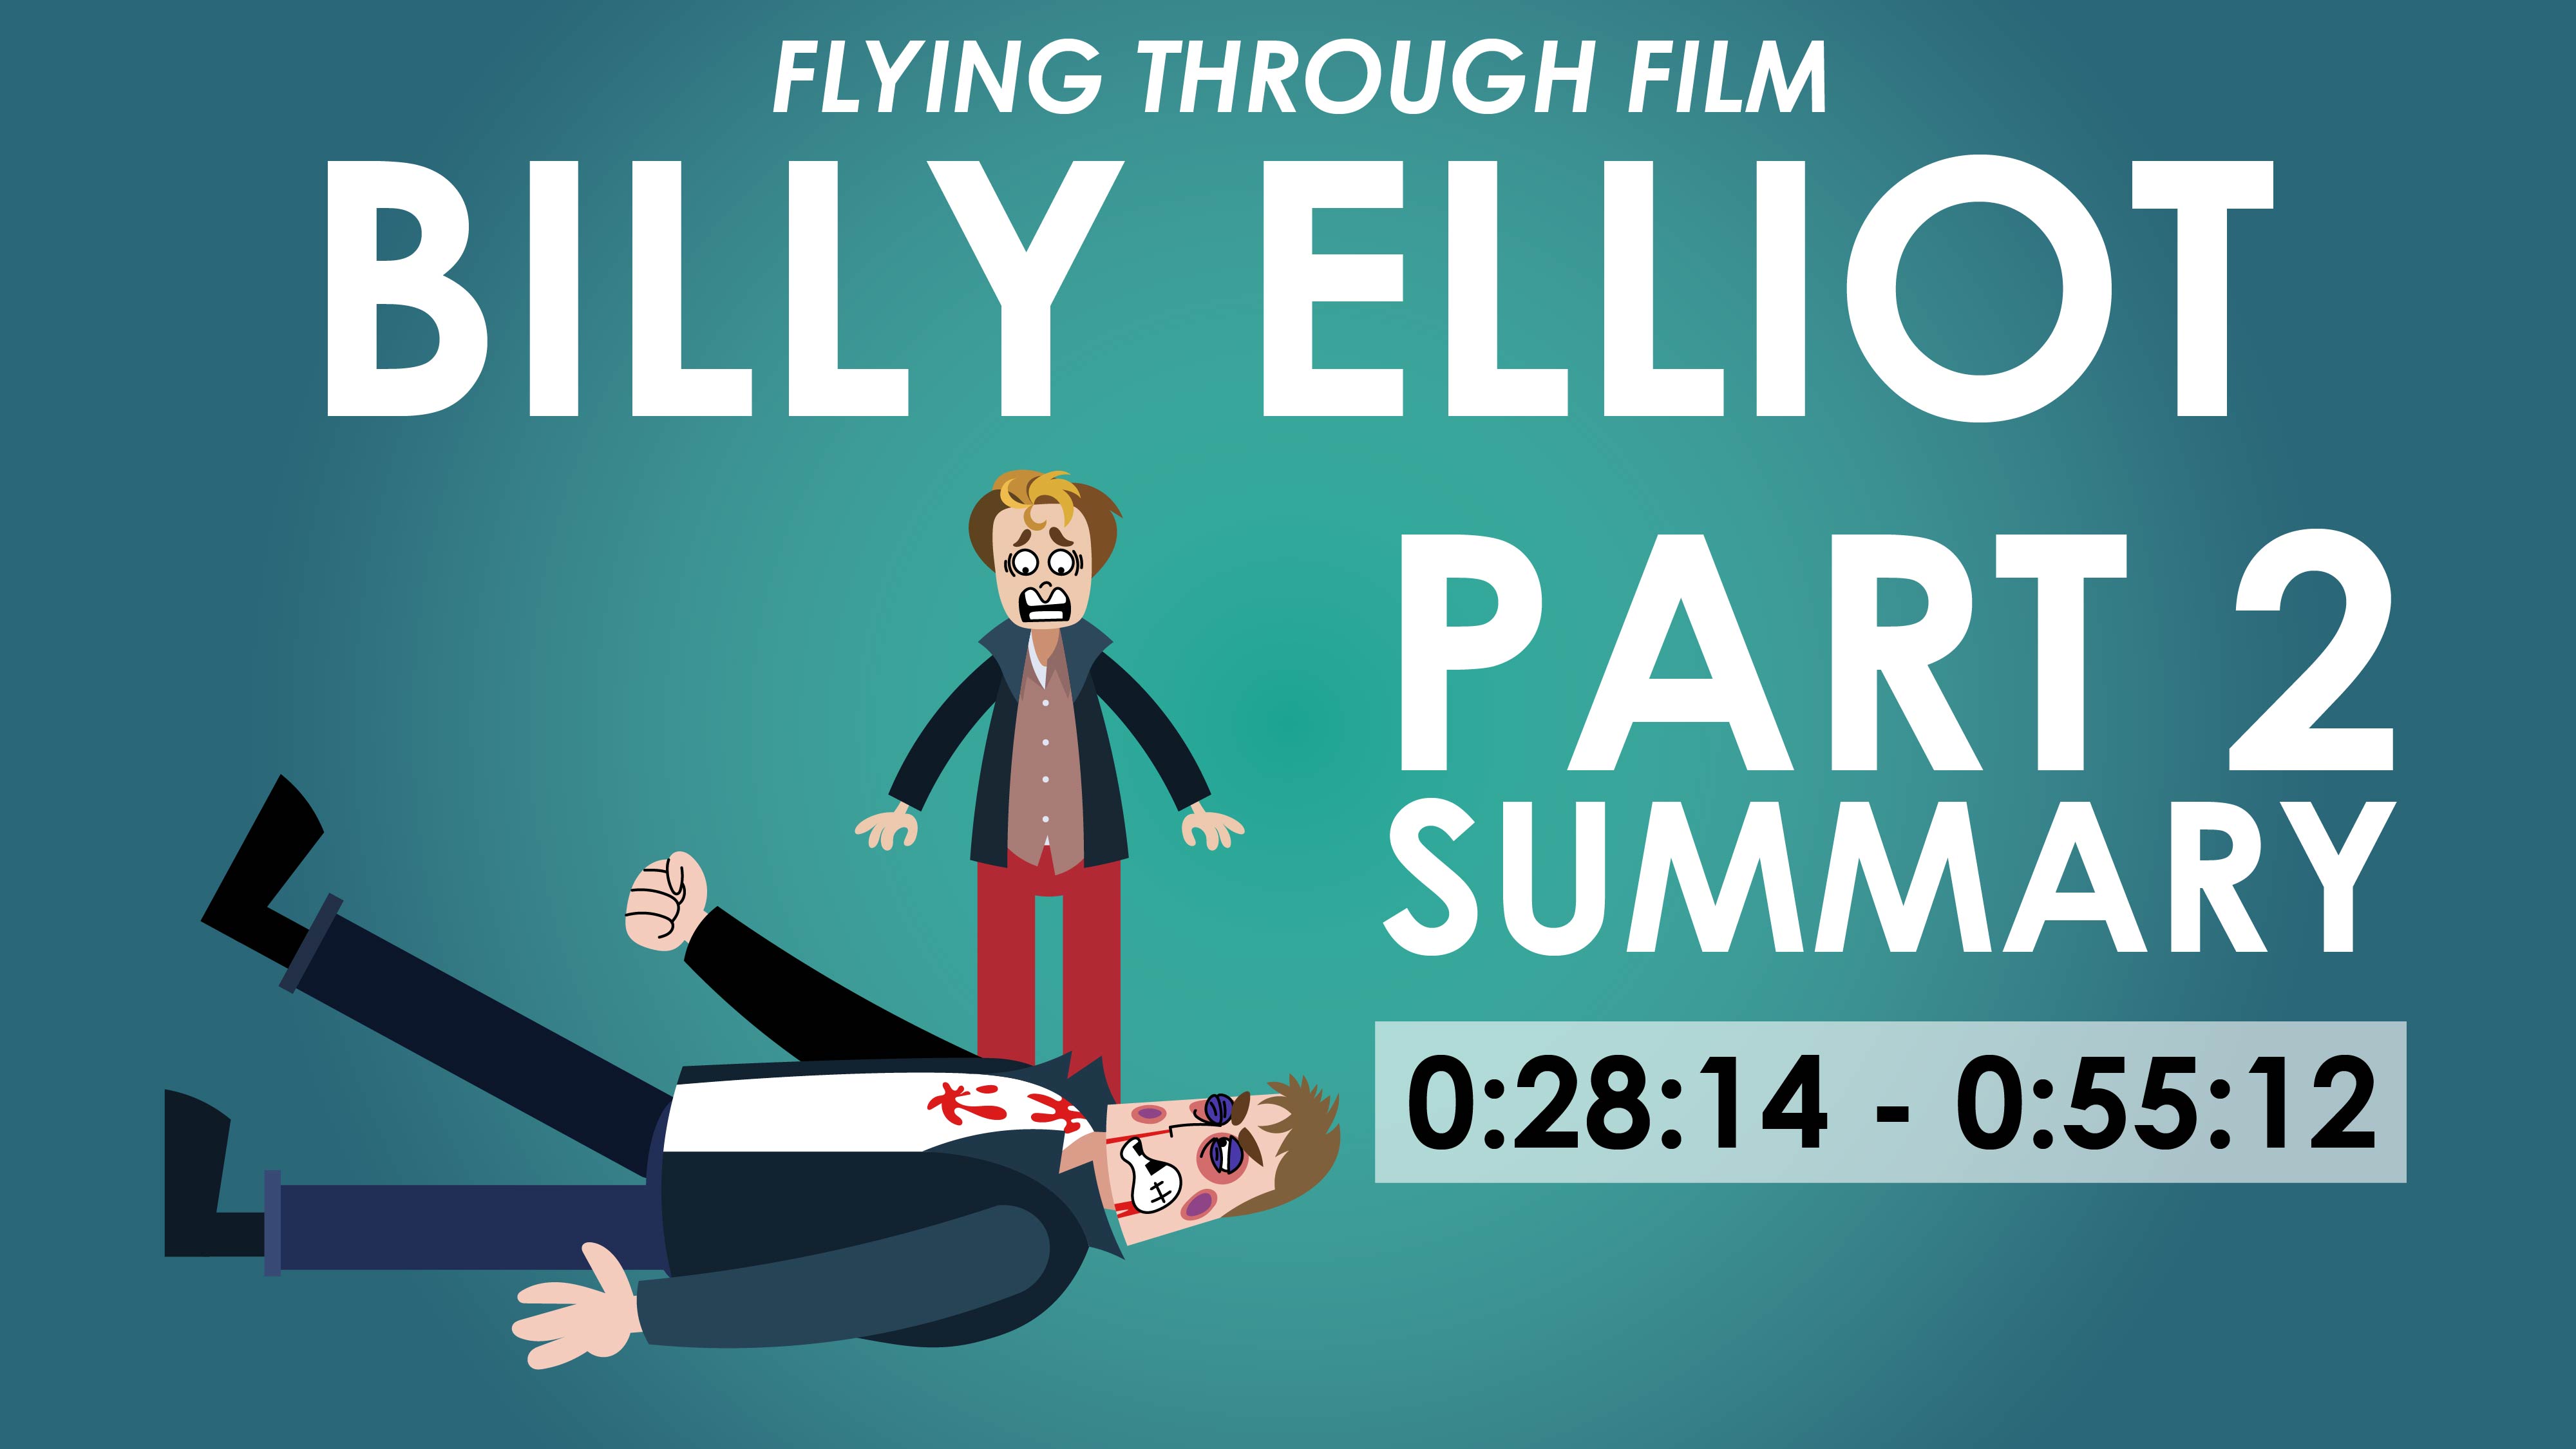 Billy Elliot - Part 2 Summary (0:28:14 - 0:55:12) - Flying Through Film Series